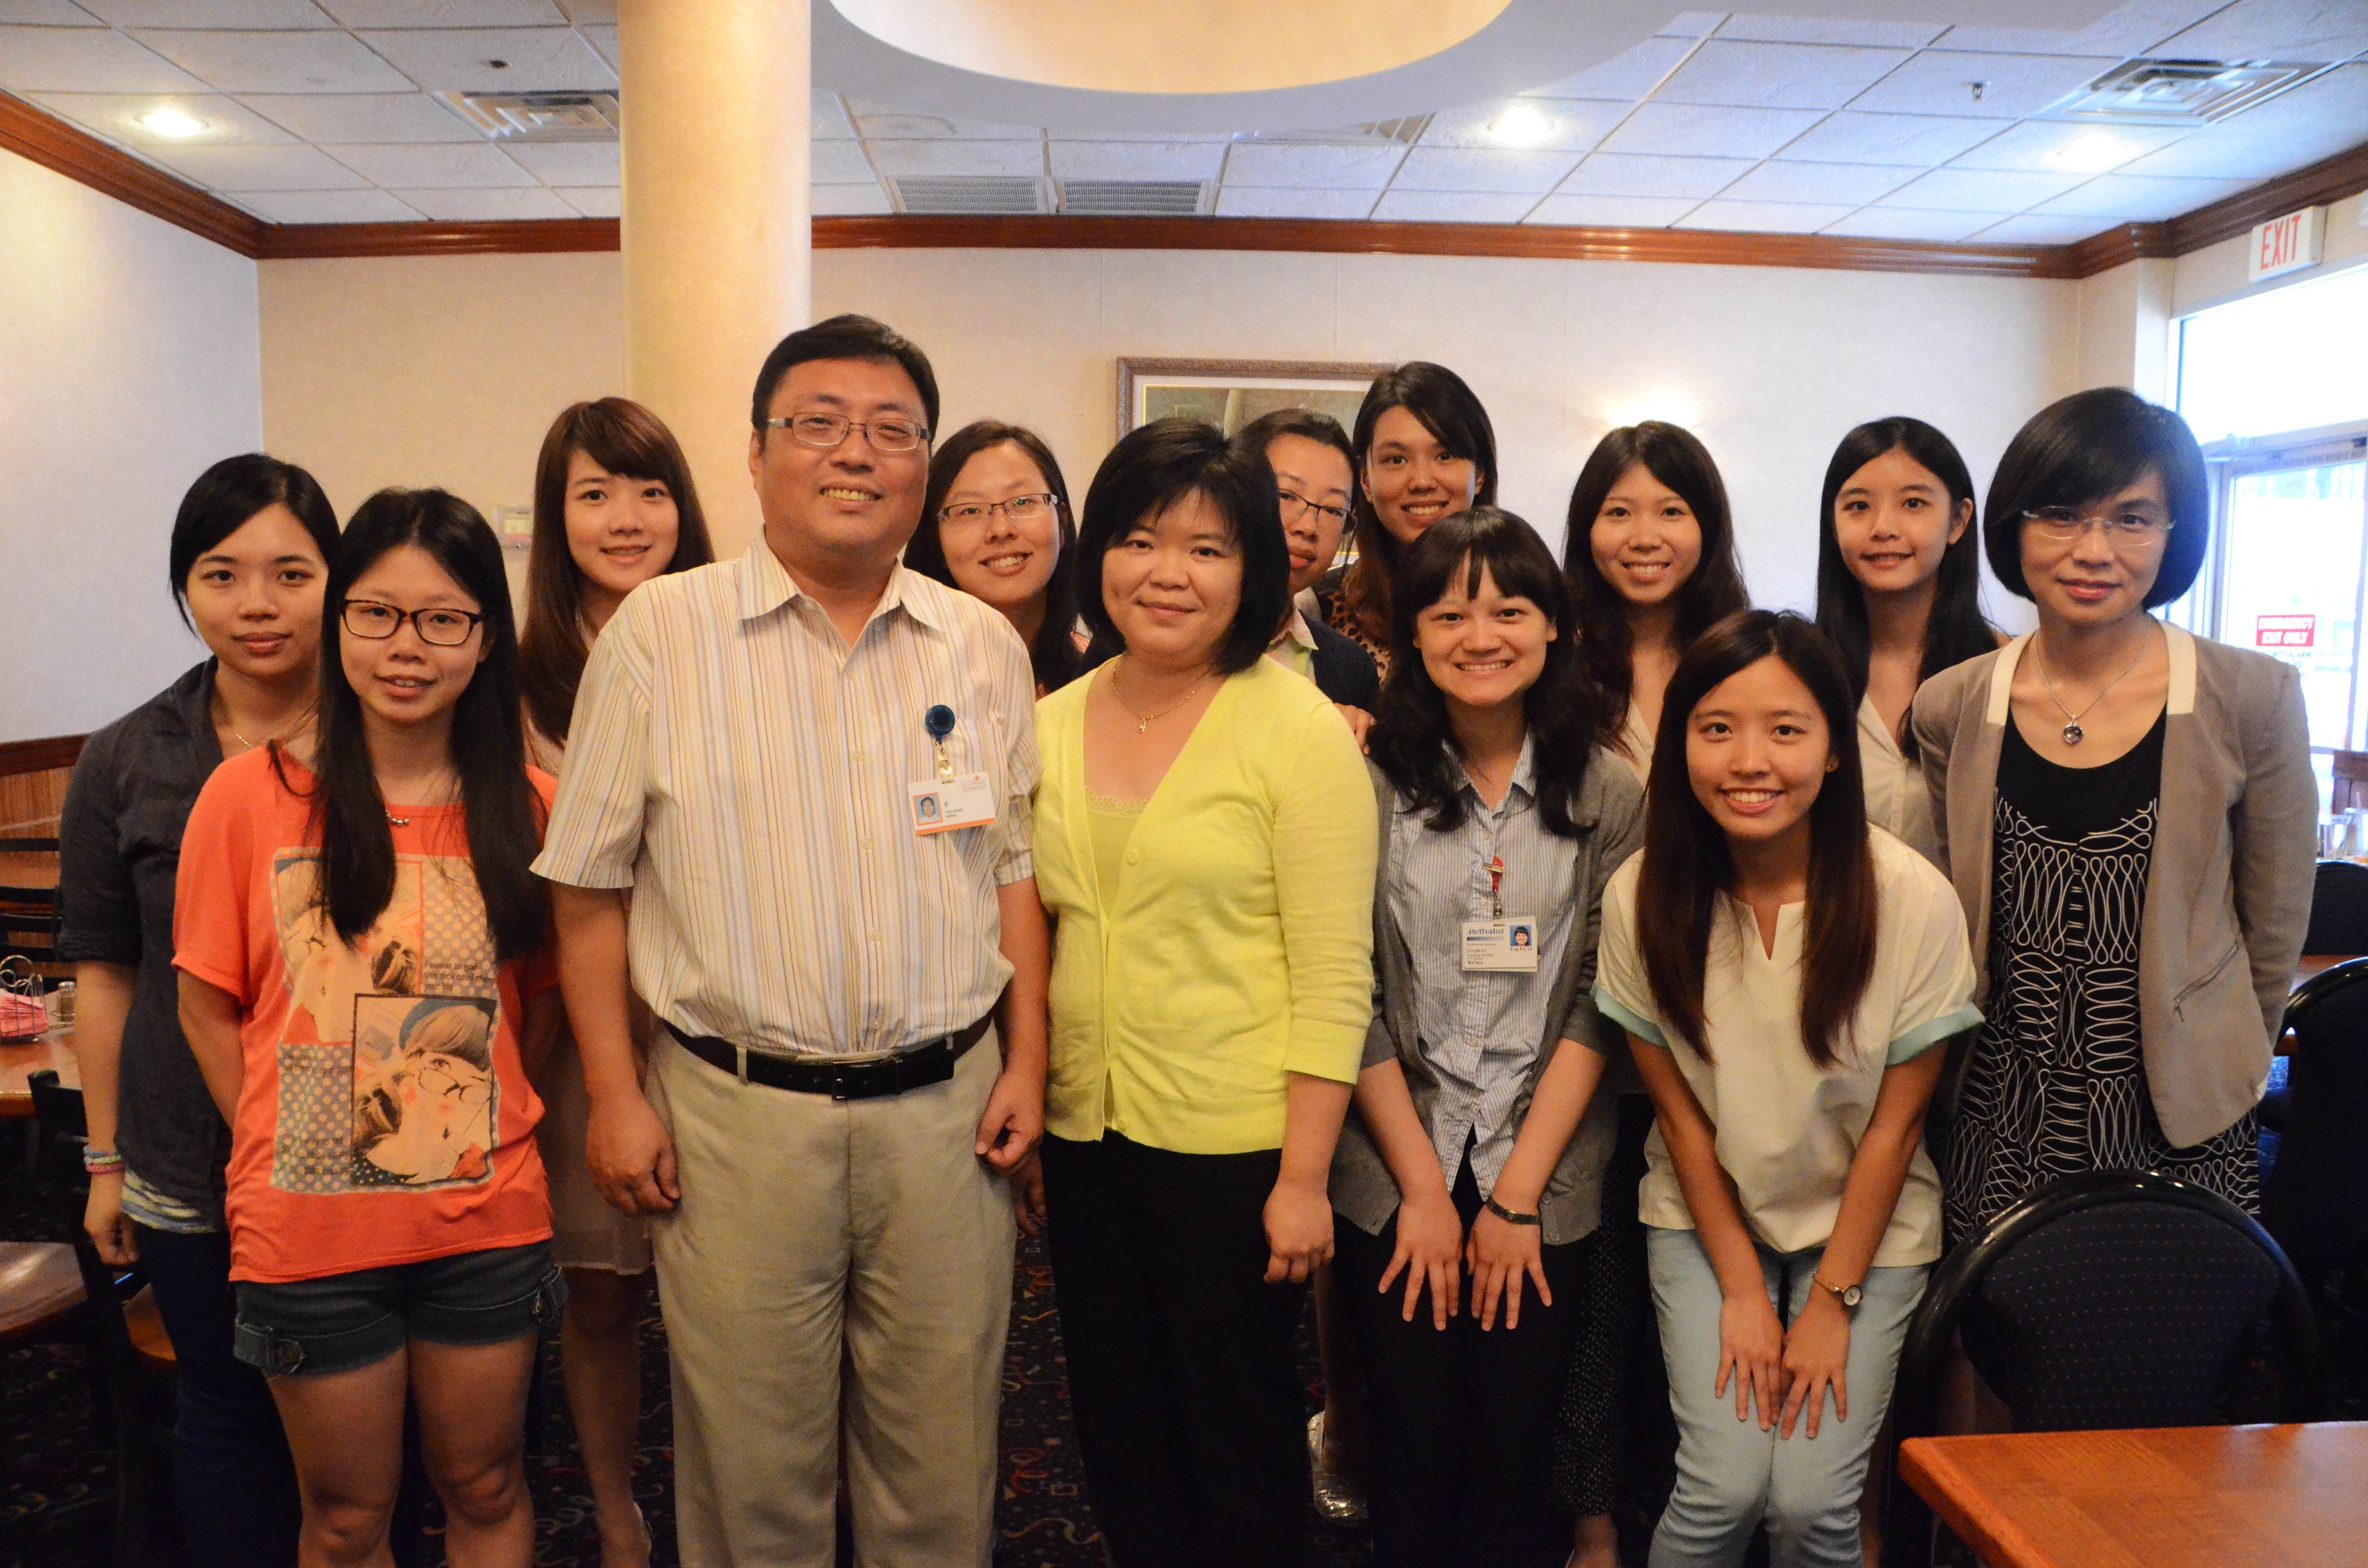 10 students from Taiwan’s Taipei Medical University visit Houston